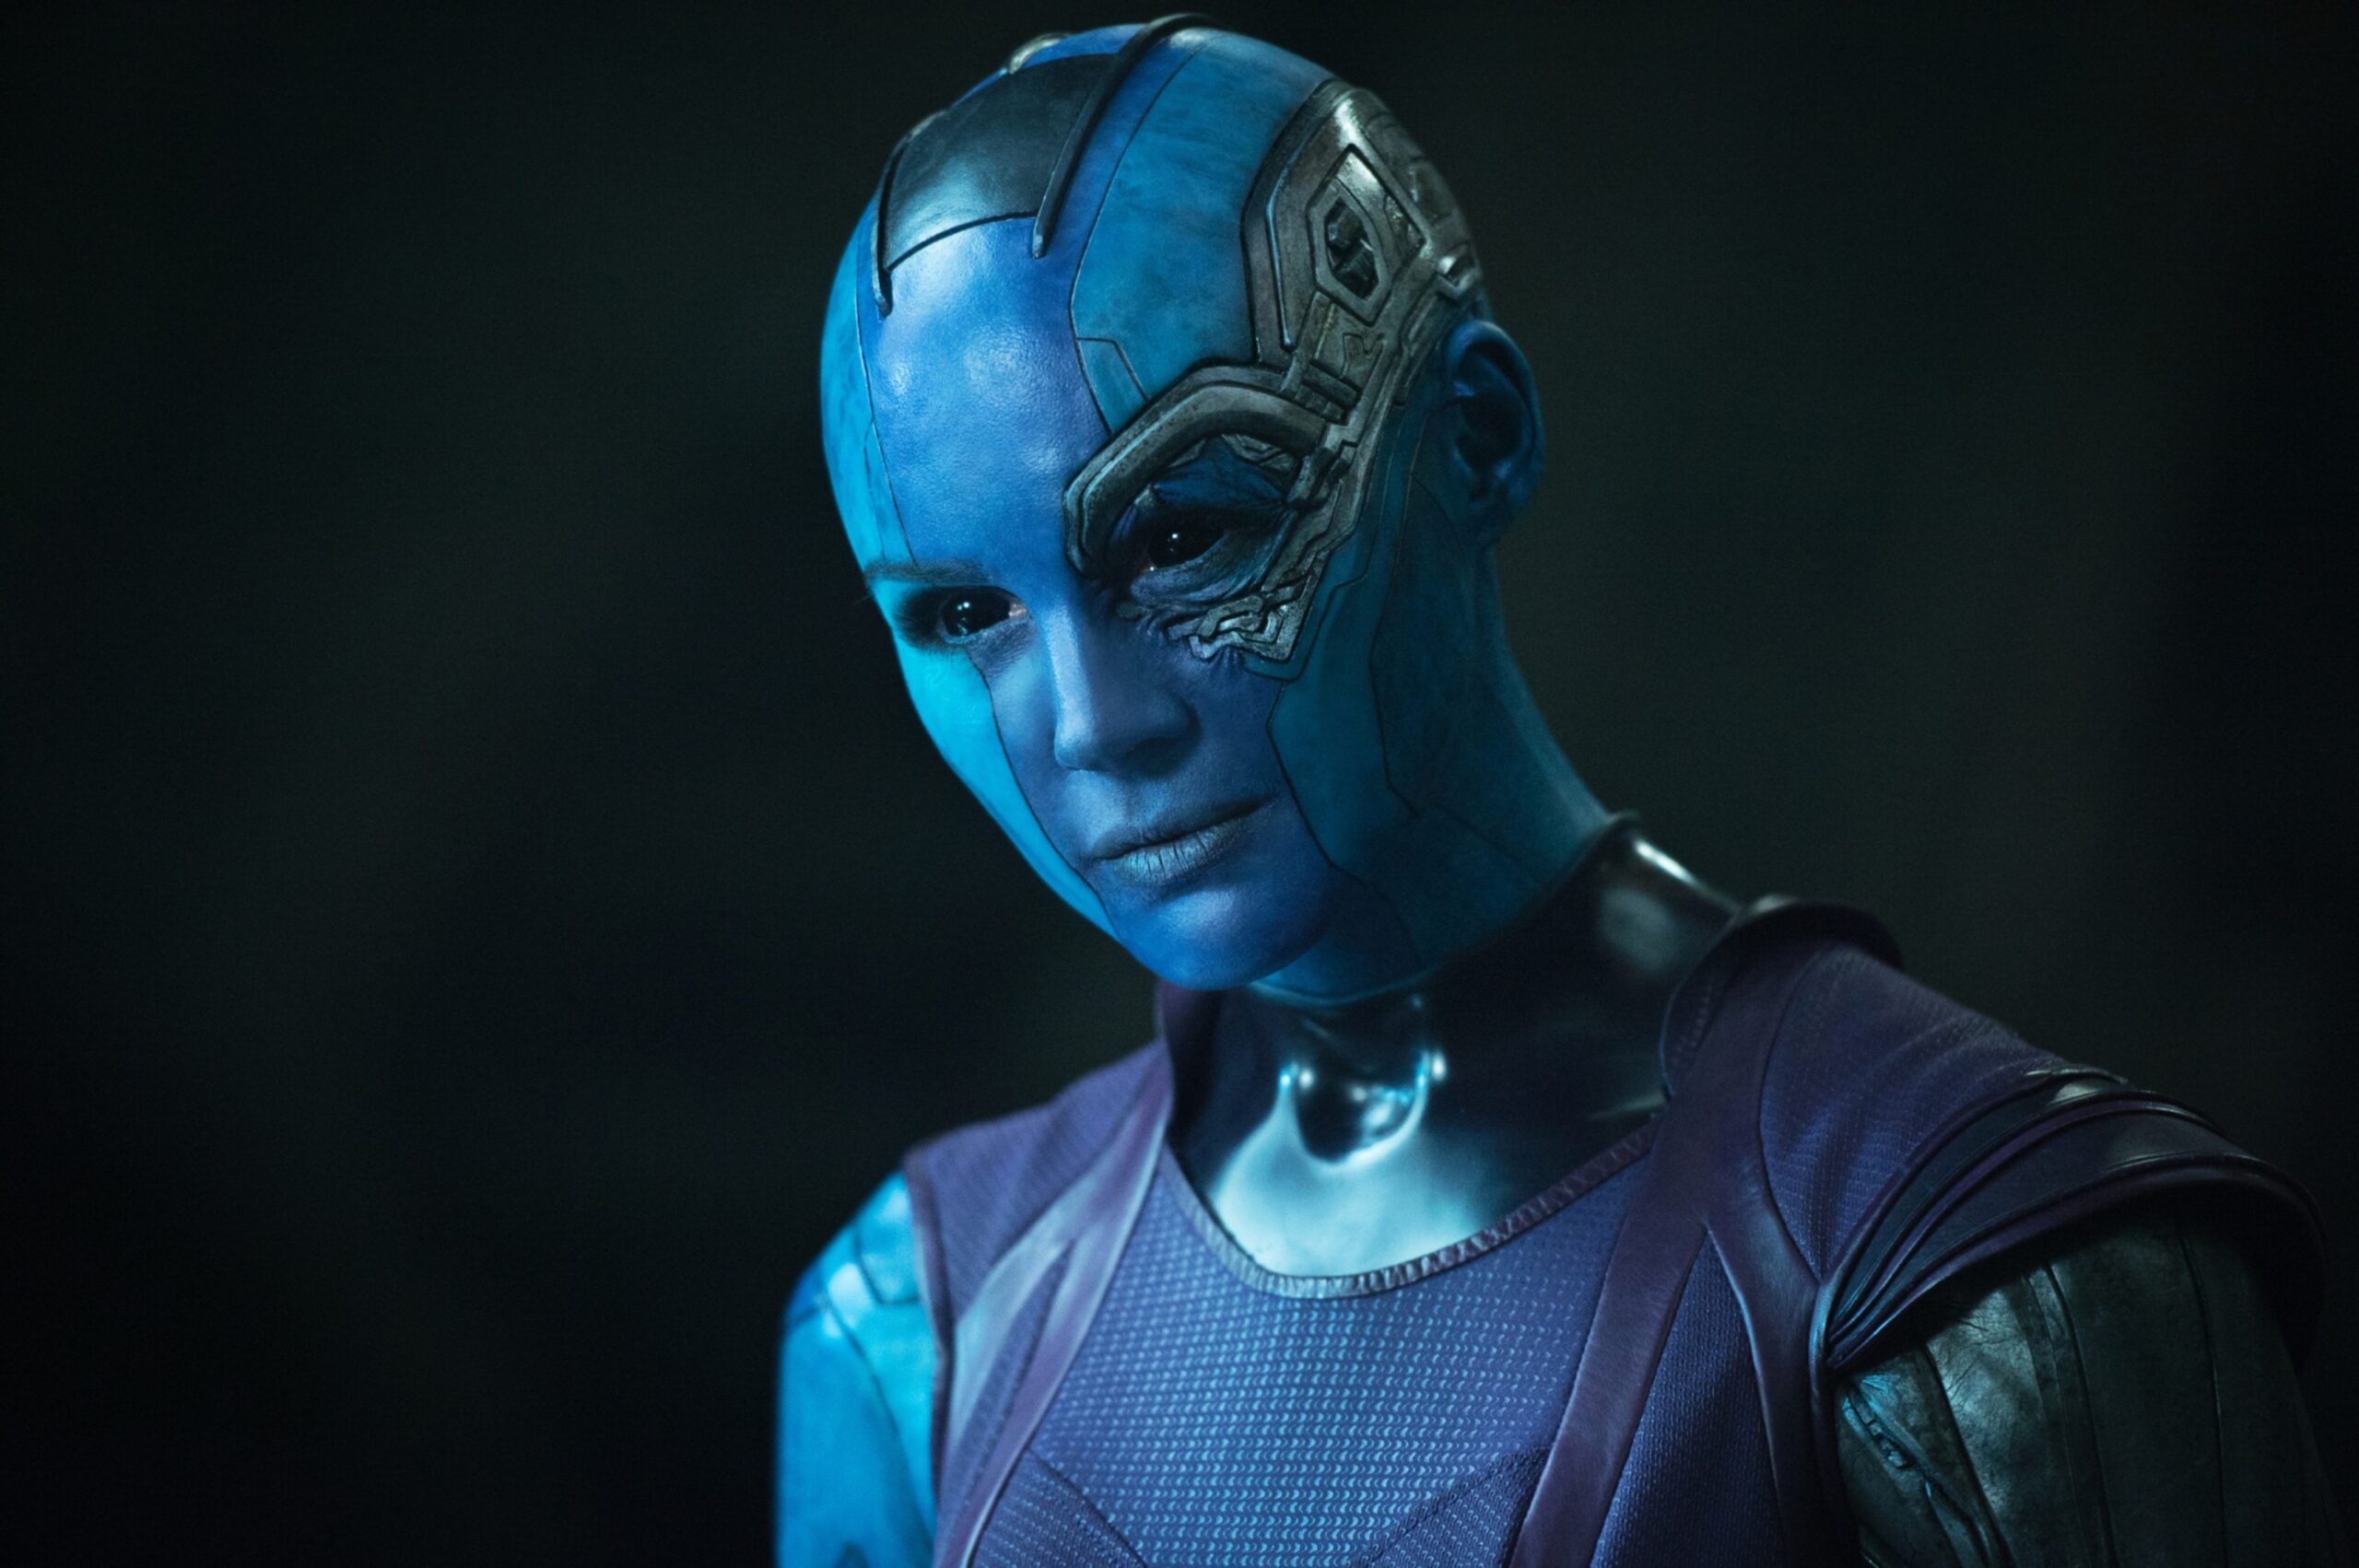 Karen Gillan as Nebula in Guardians of the Galaxy.